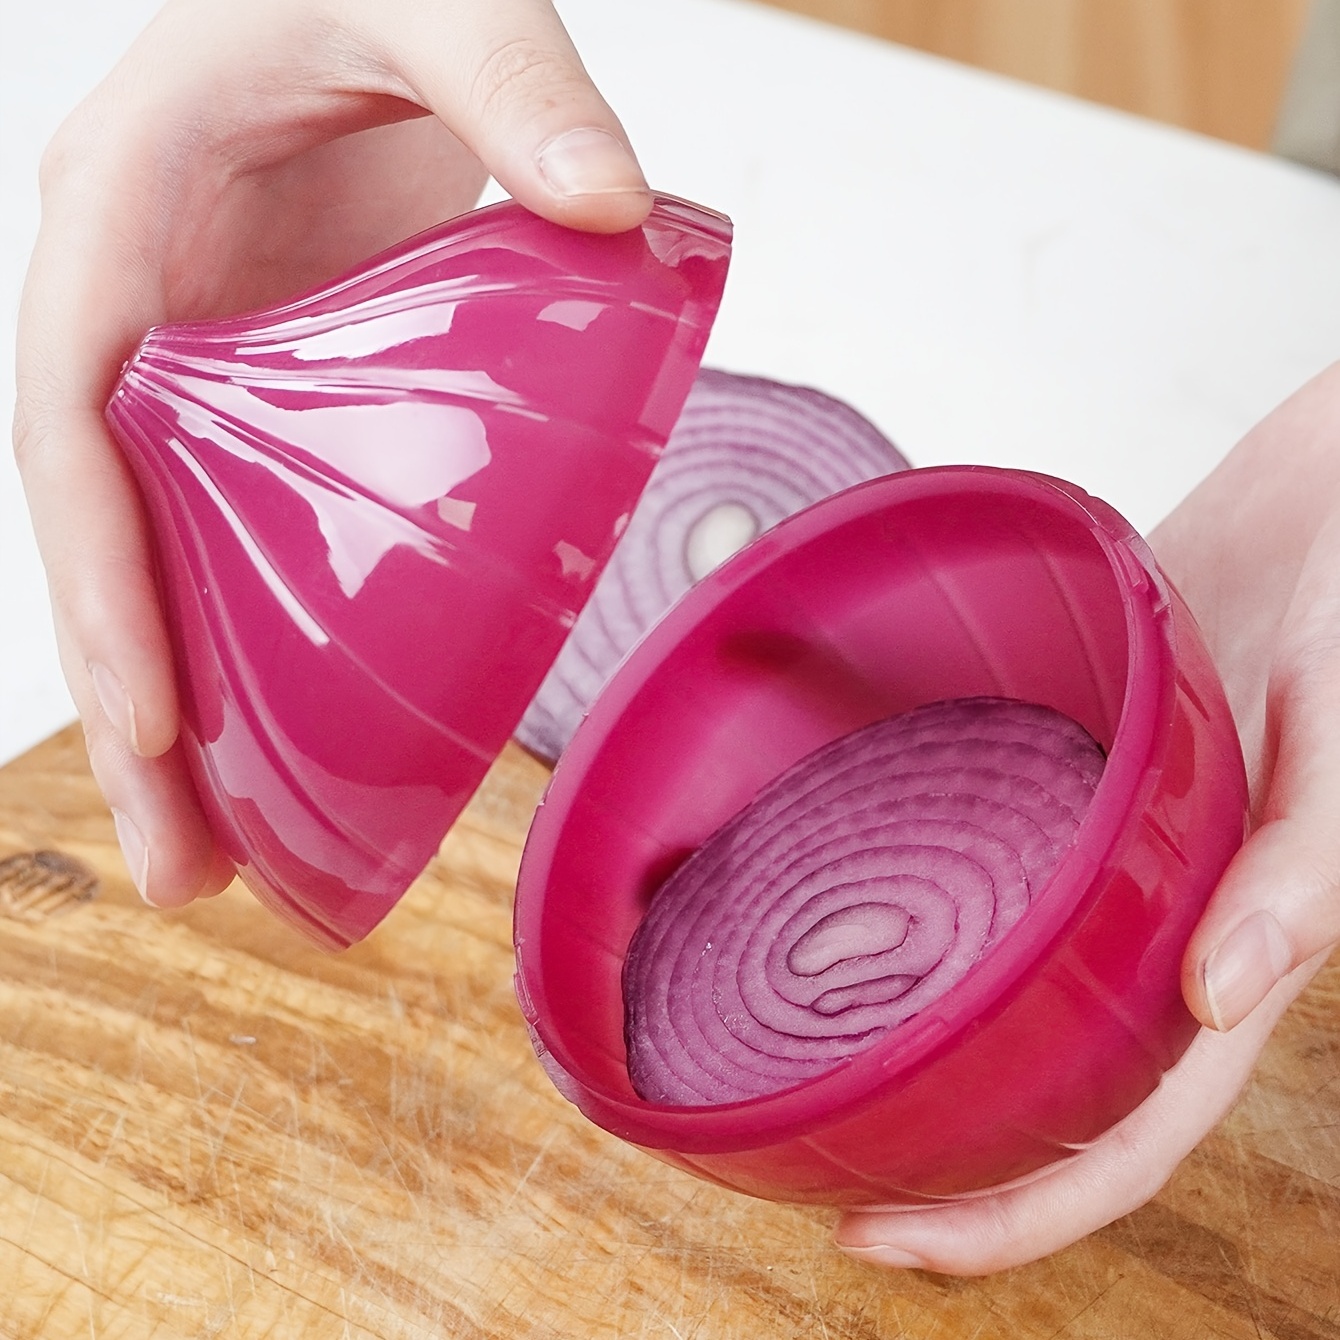 Onion Saver Food Storage to Keep Your Food Fresh